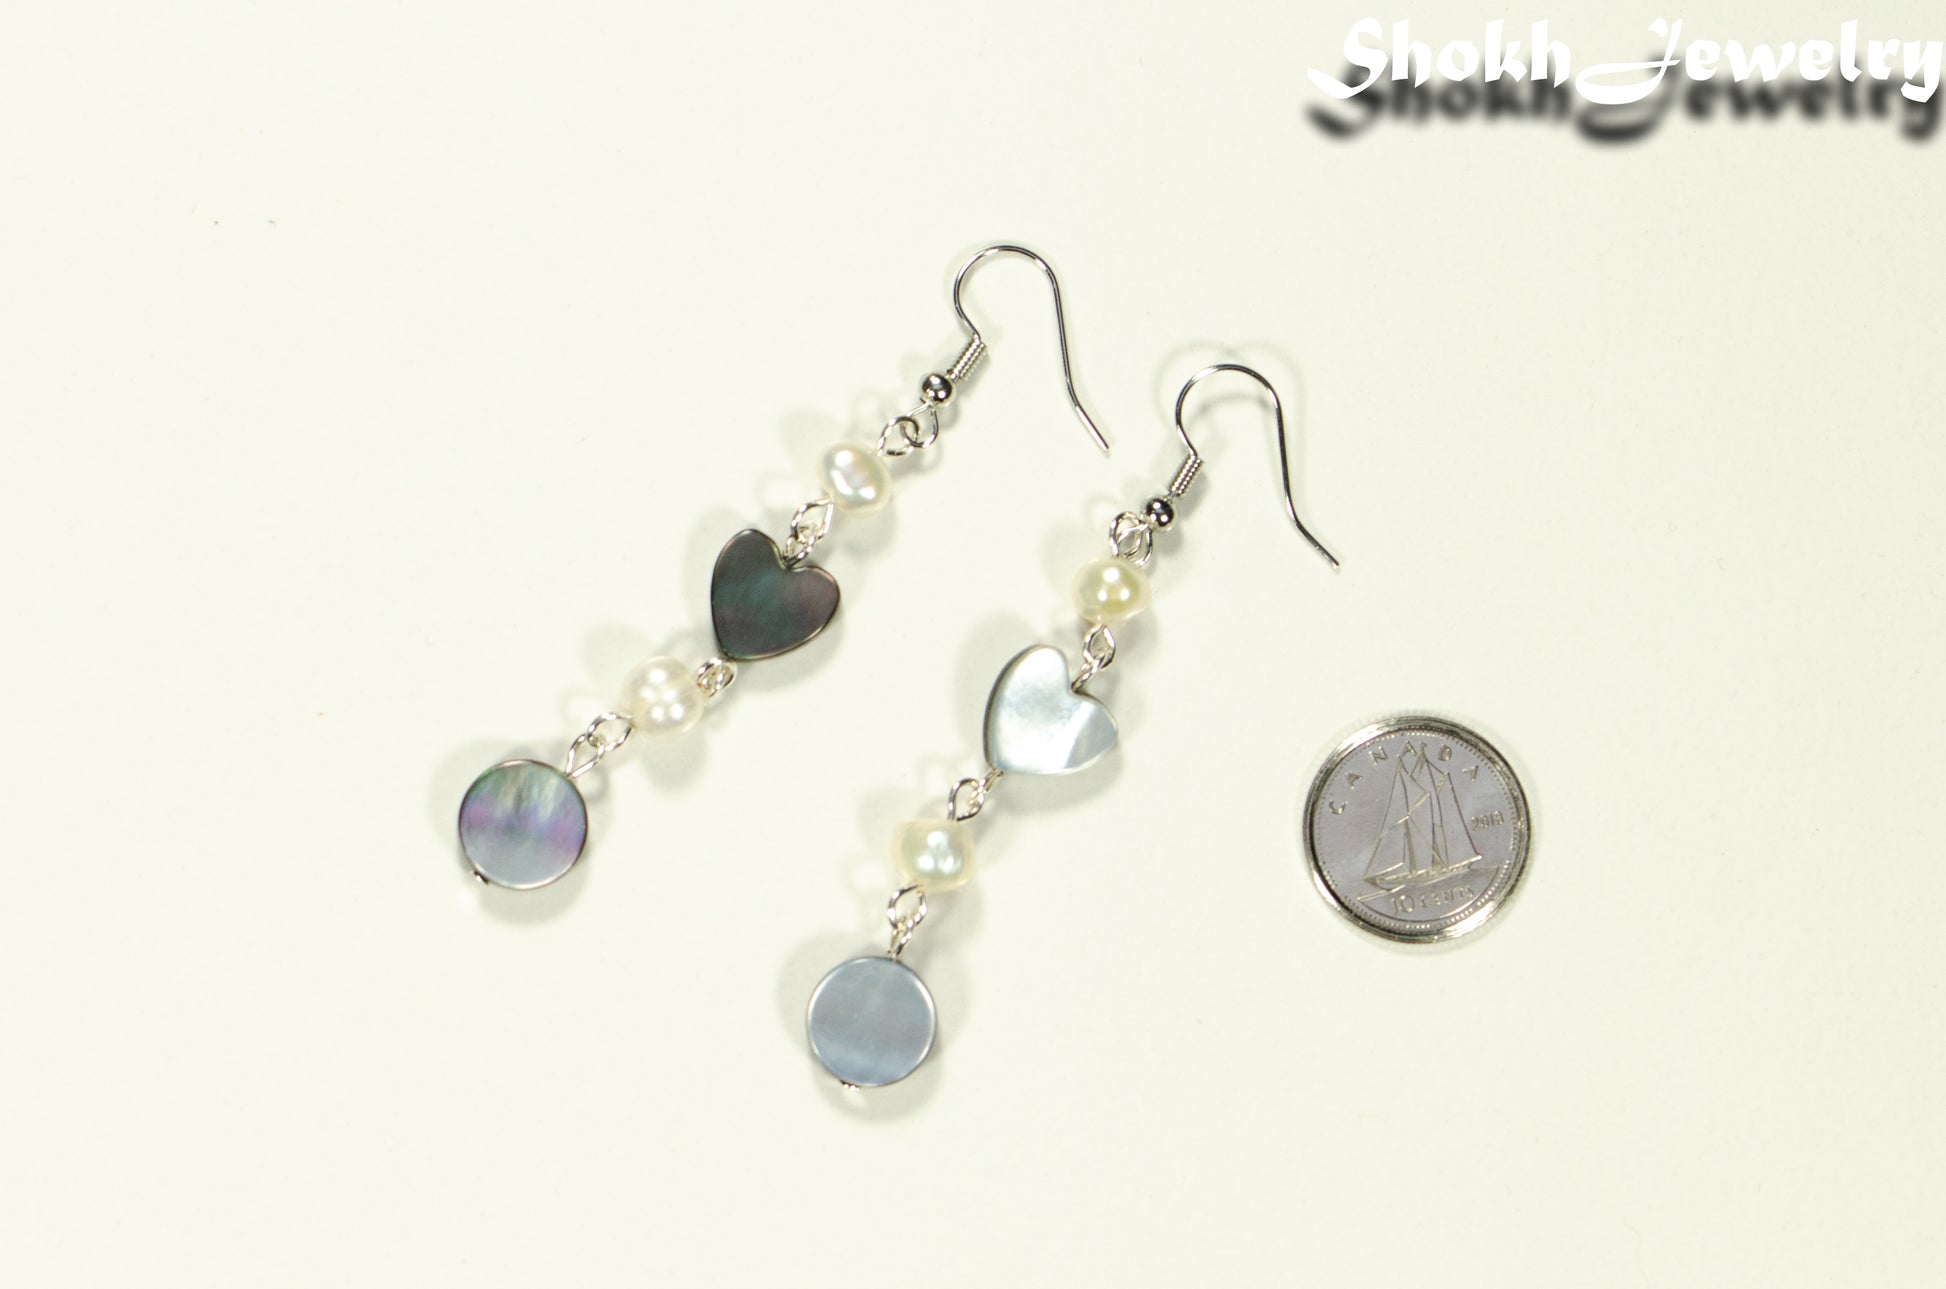 Long Grey Seashell and Freshwater Pearl Earrings beside a dime.